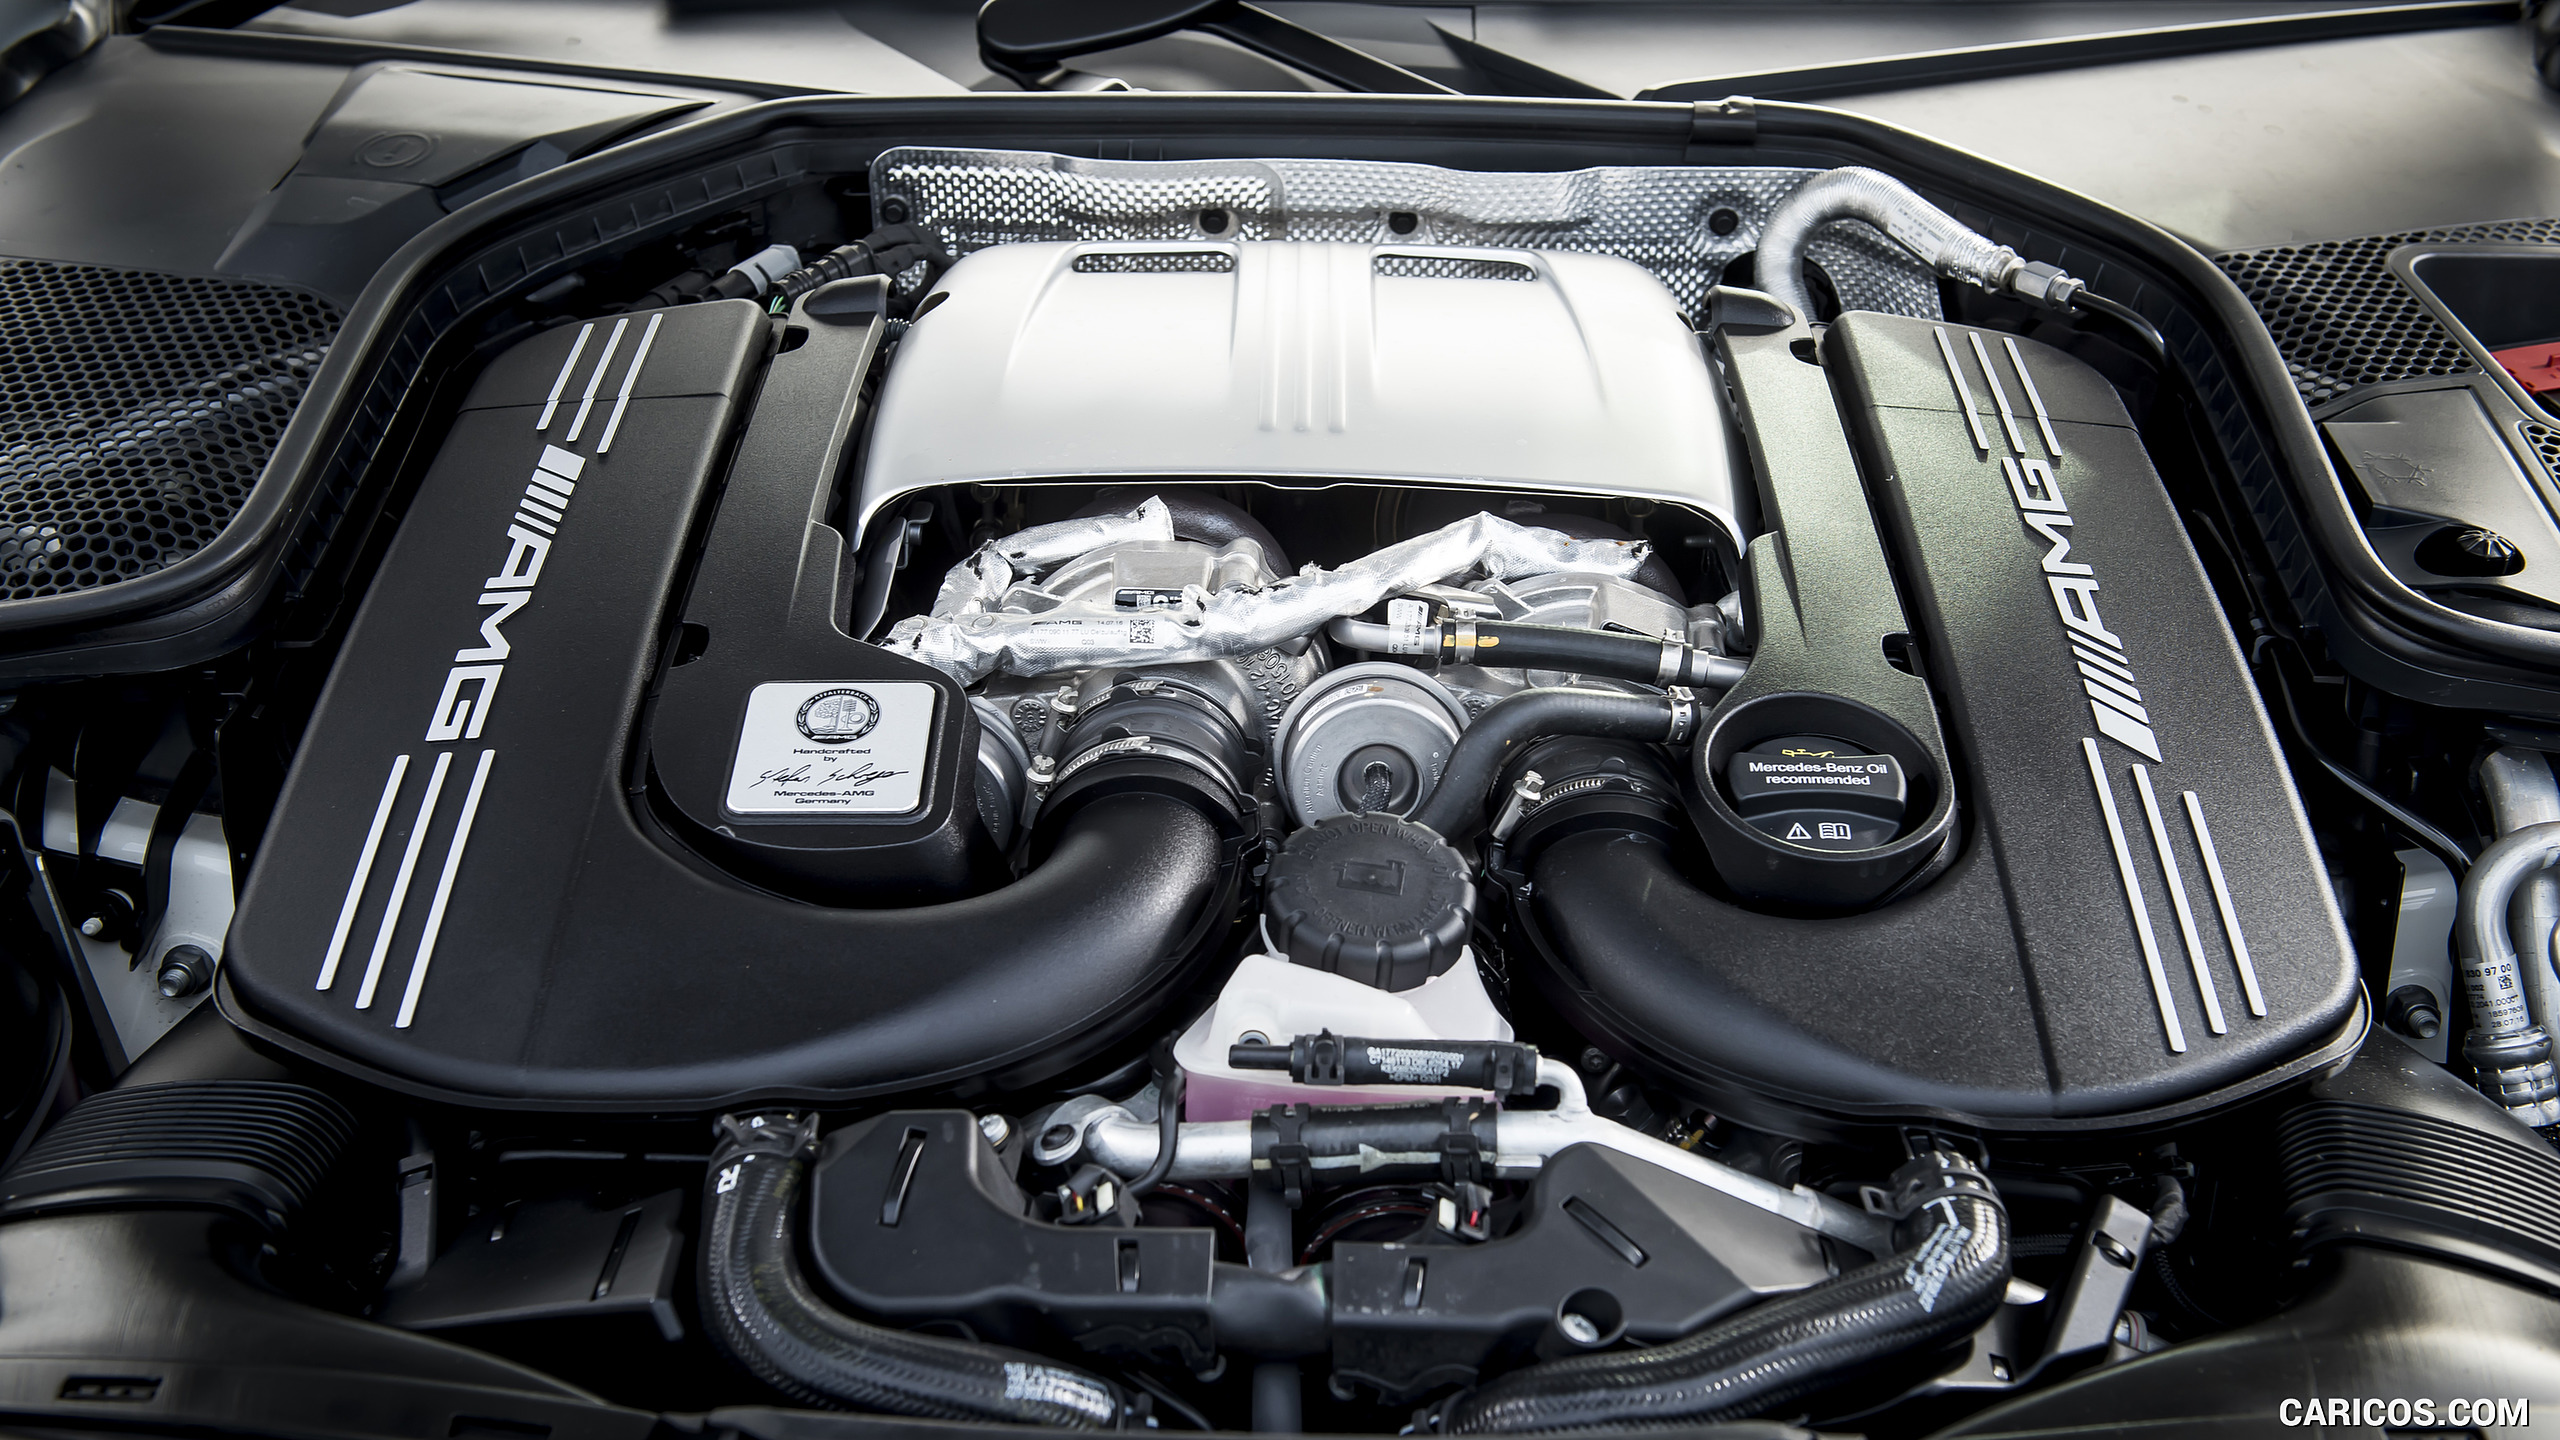 2017 Mercedes-AMG C63 S Cabriolet (UK-Spec) - Engine, #50 of 50